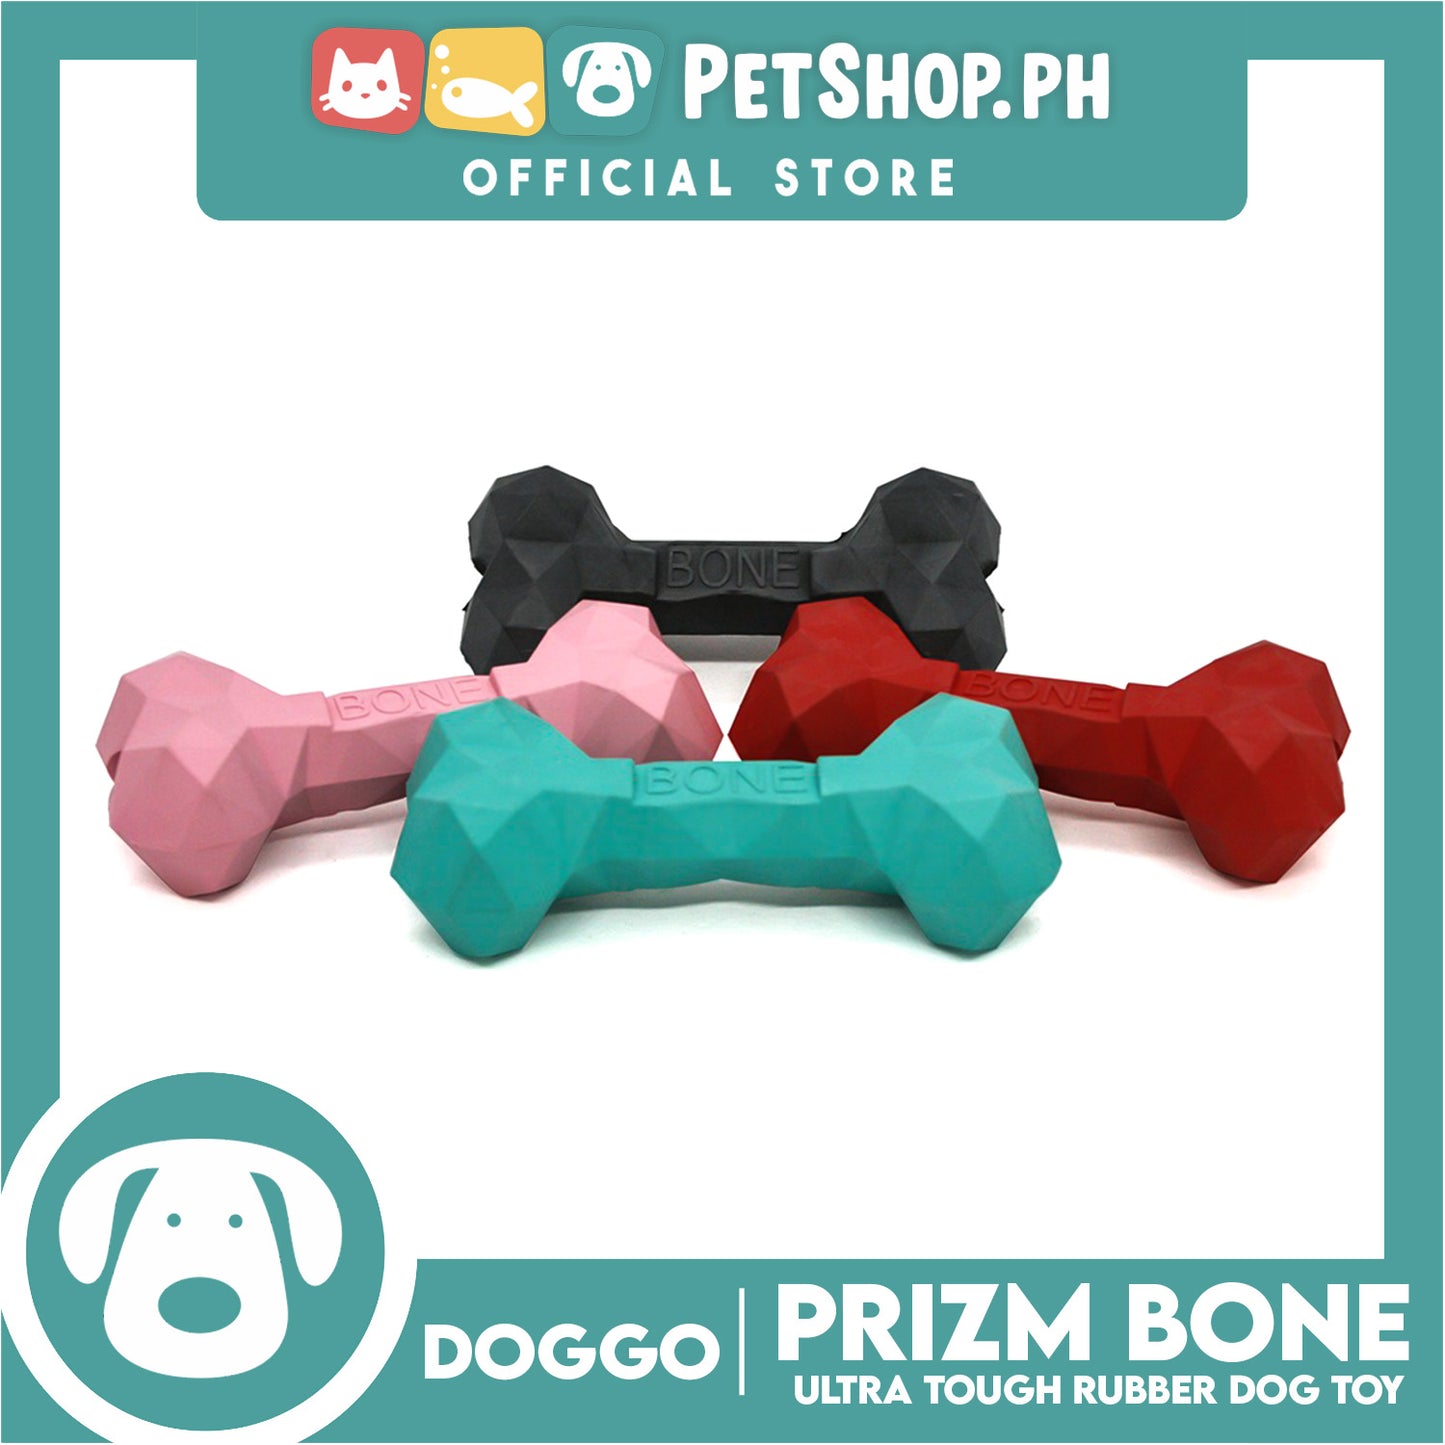 Doggo Prizm Bone Black Color 6.5'' (Large Size) Ultra Tough Rubber Dog Toy